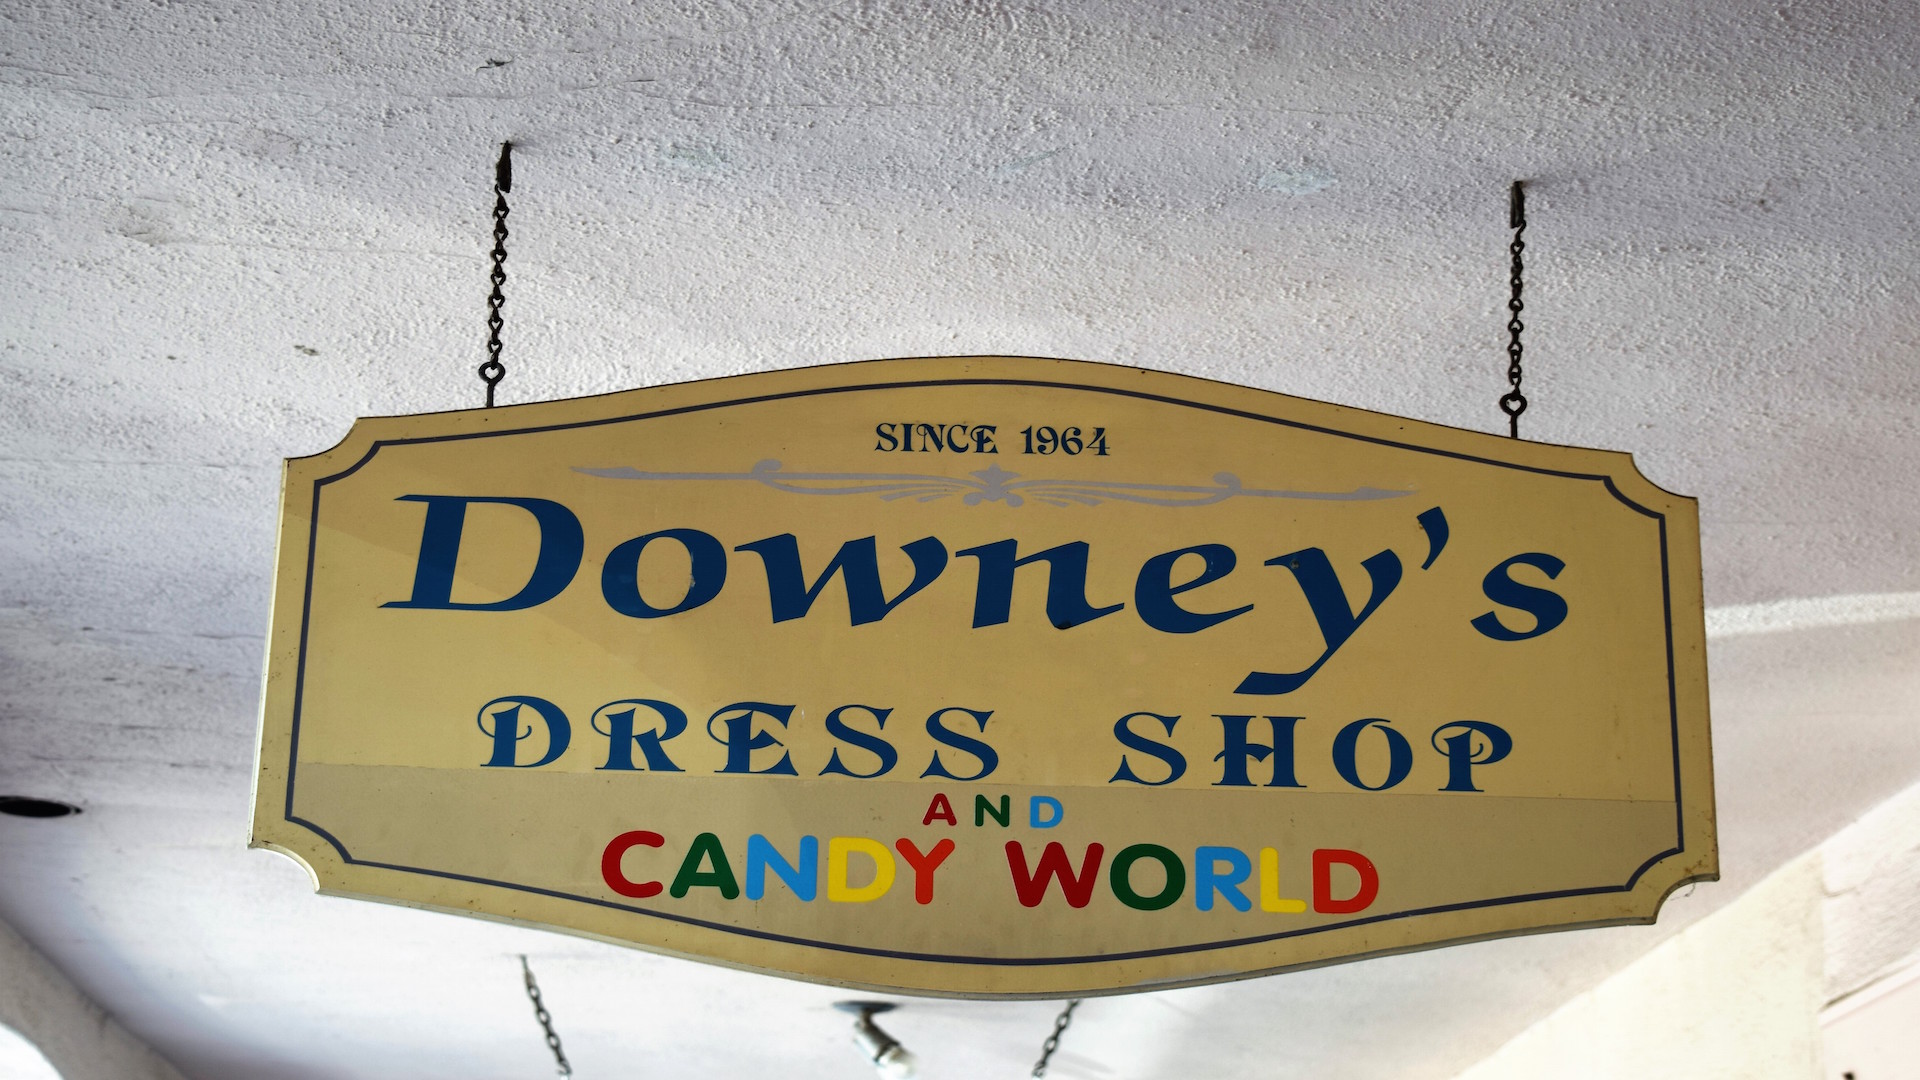 Downey’s Dress Shop & Candy